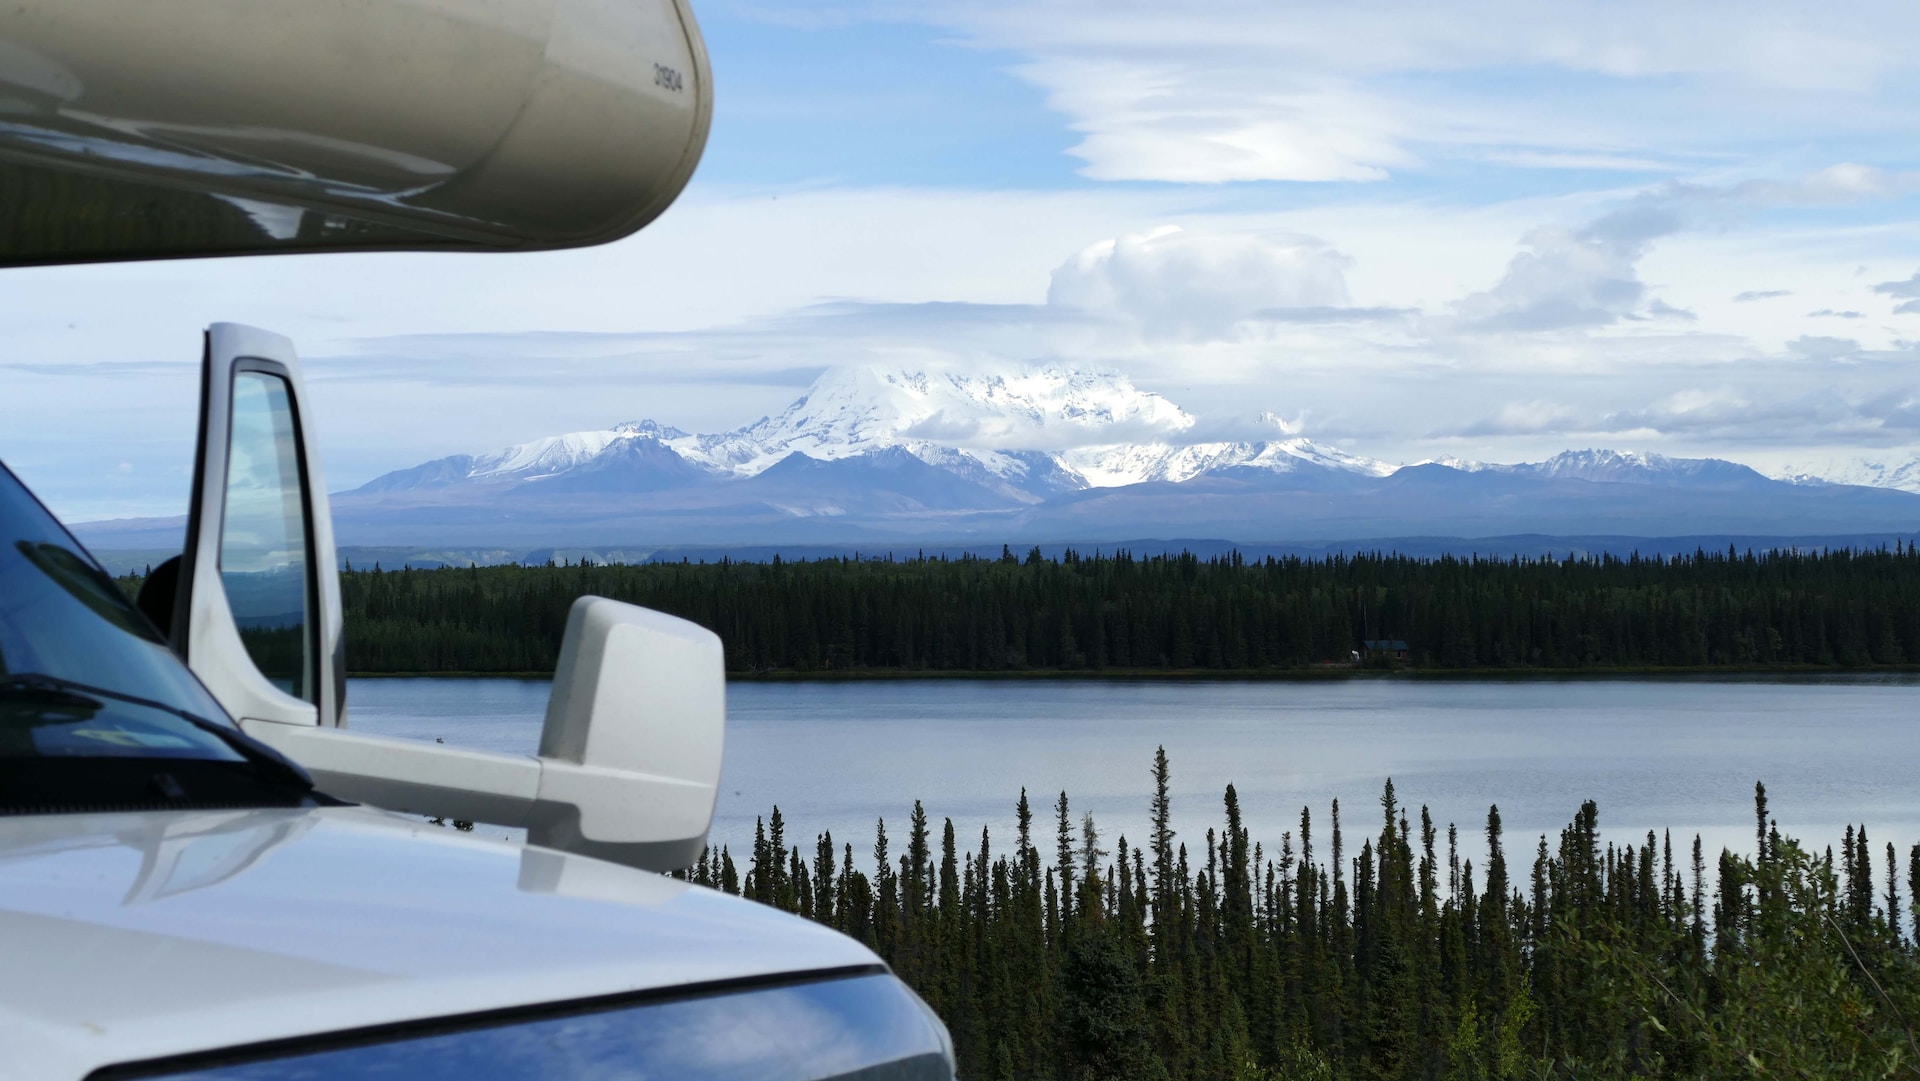 How to Ship a Car to Alaska: Tips and Tricks for Safe Transport